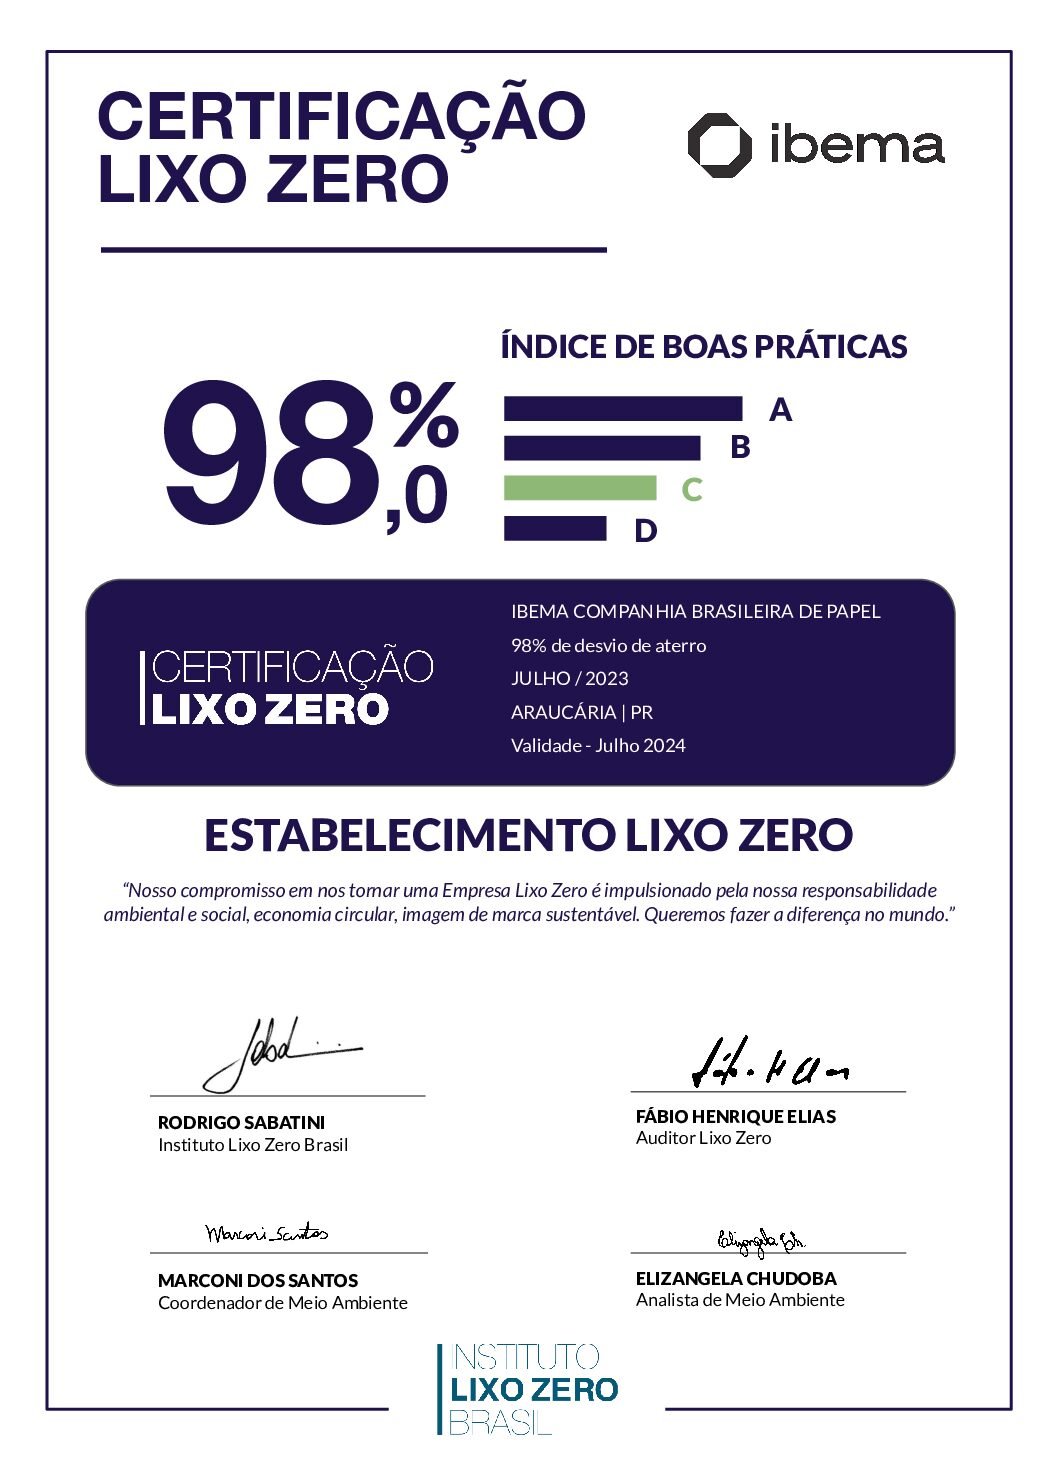 CertificaçãoLixoZero_Ibema_Araucária_PR_Julho_2023 (1)